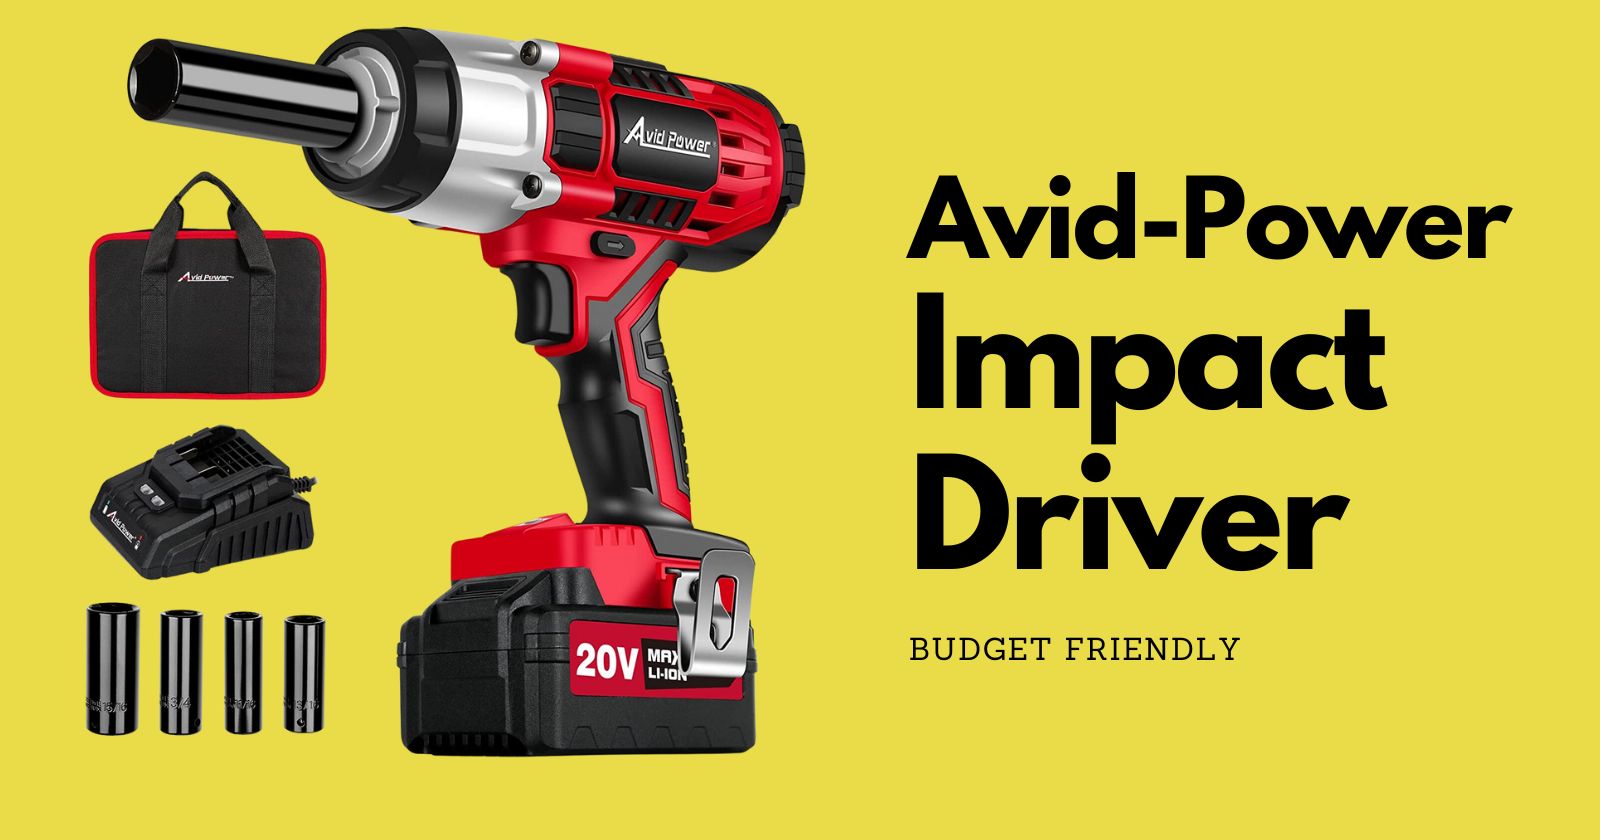 Avid-Power Impact Driver